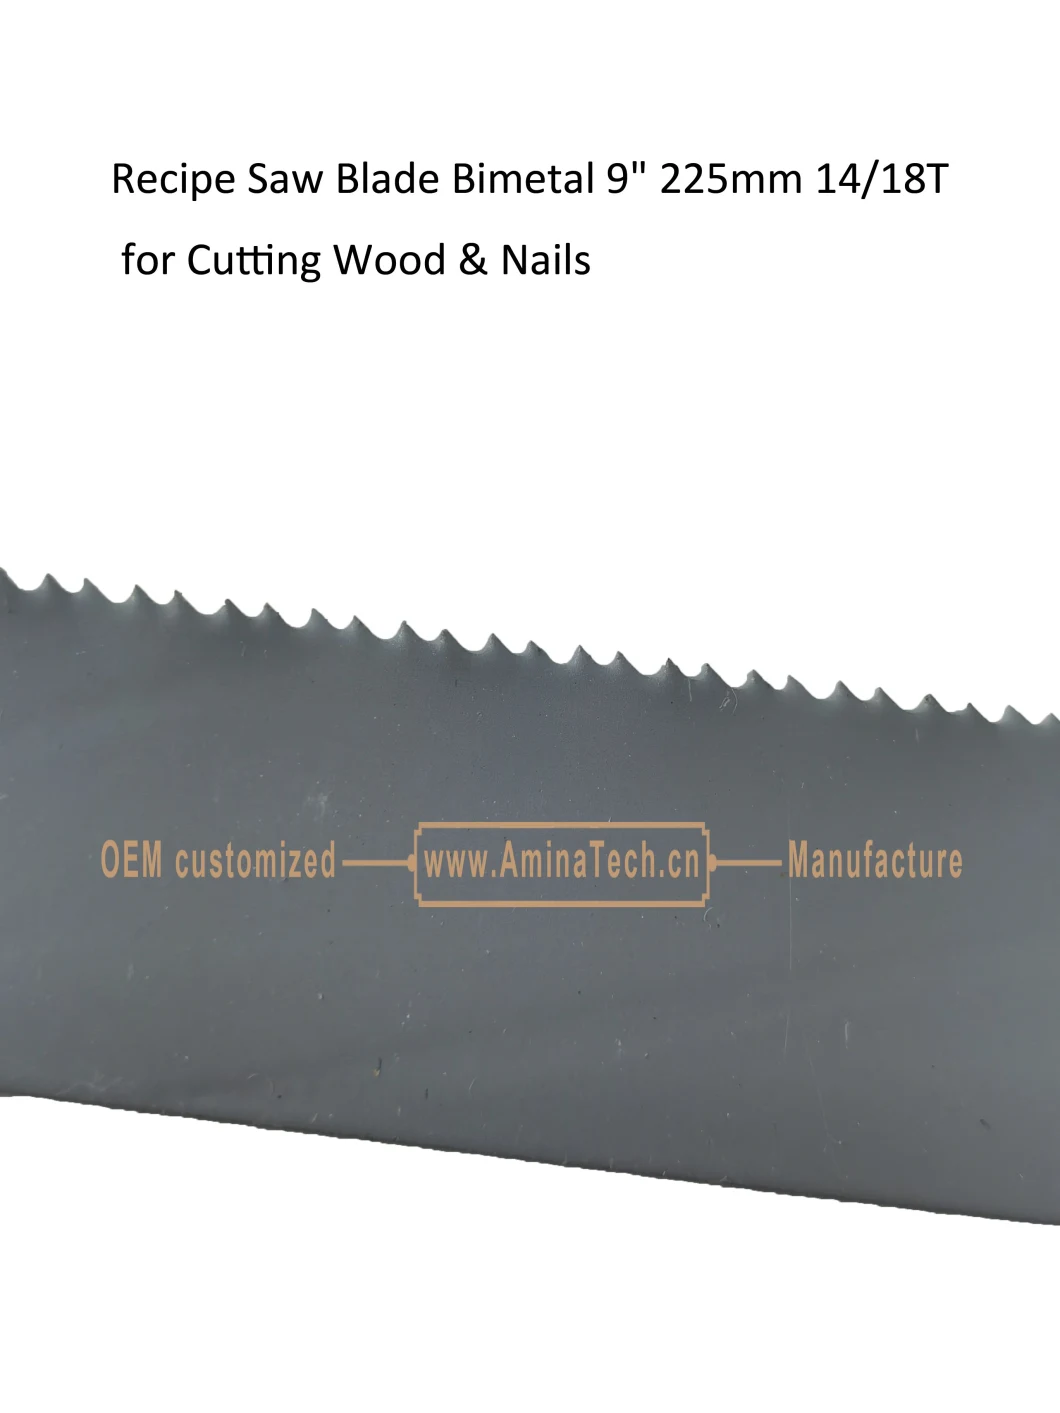 Recip Saw Blade Bimetal M42 8% cobalt Demolition for Cutting Steel Tube, Metal Sheet and Hard Wood Size:9